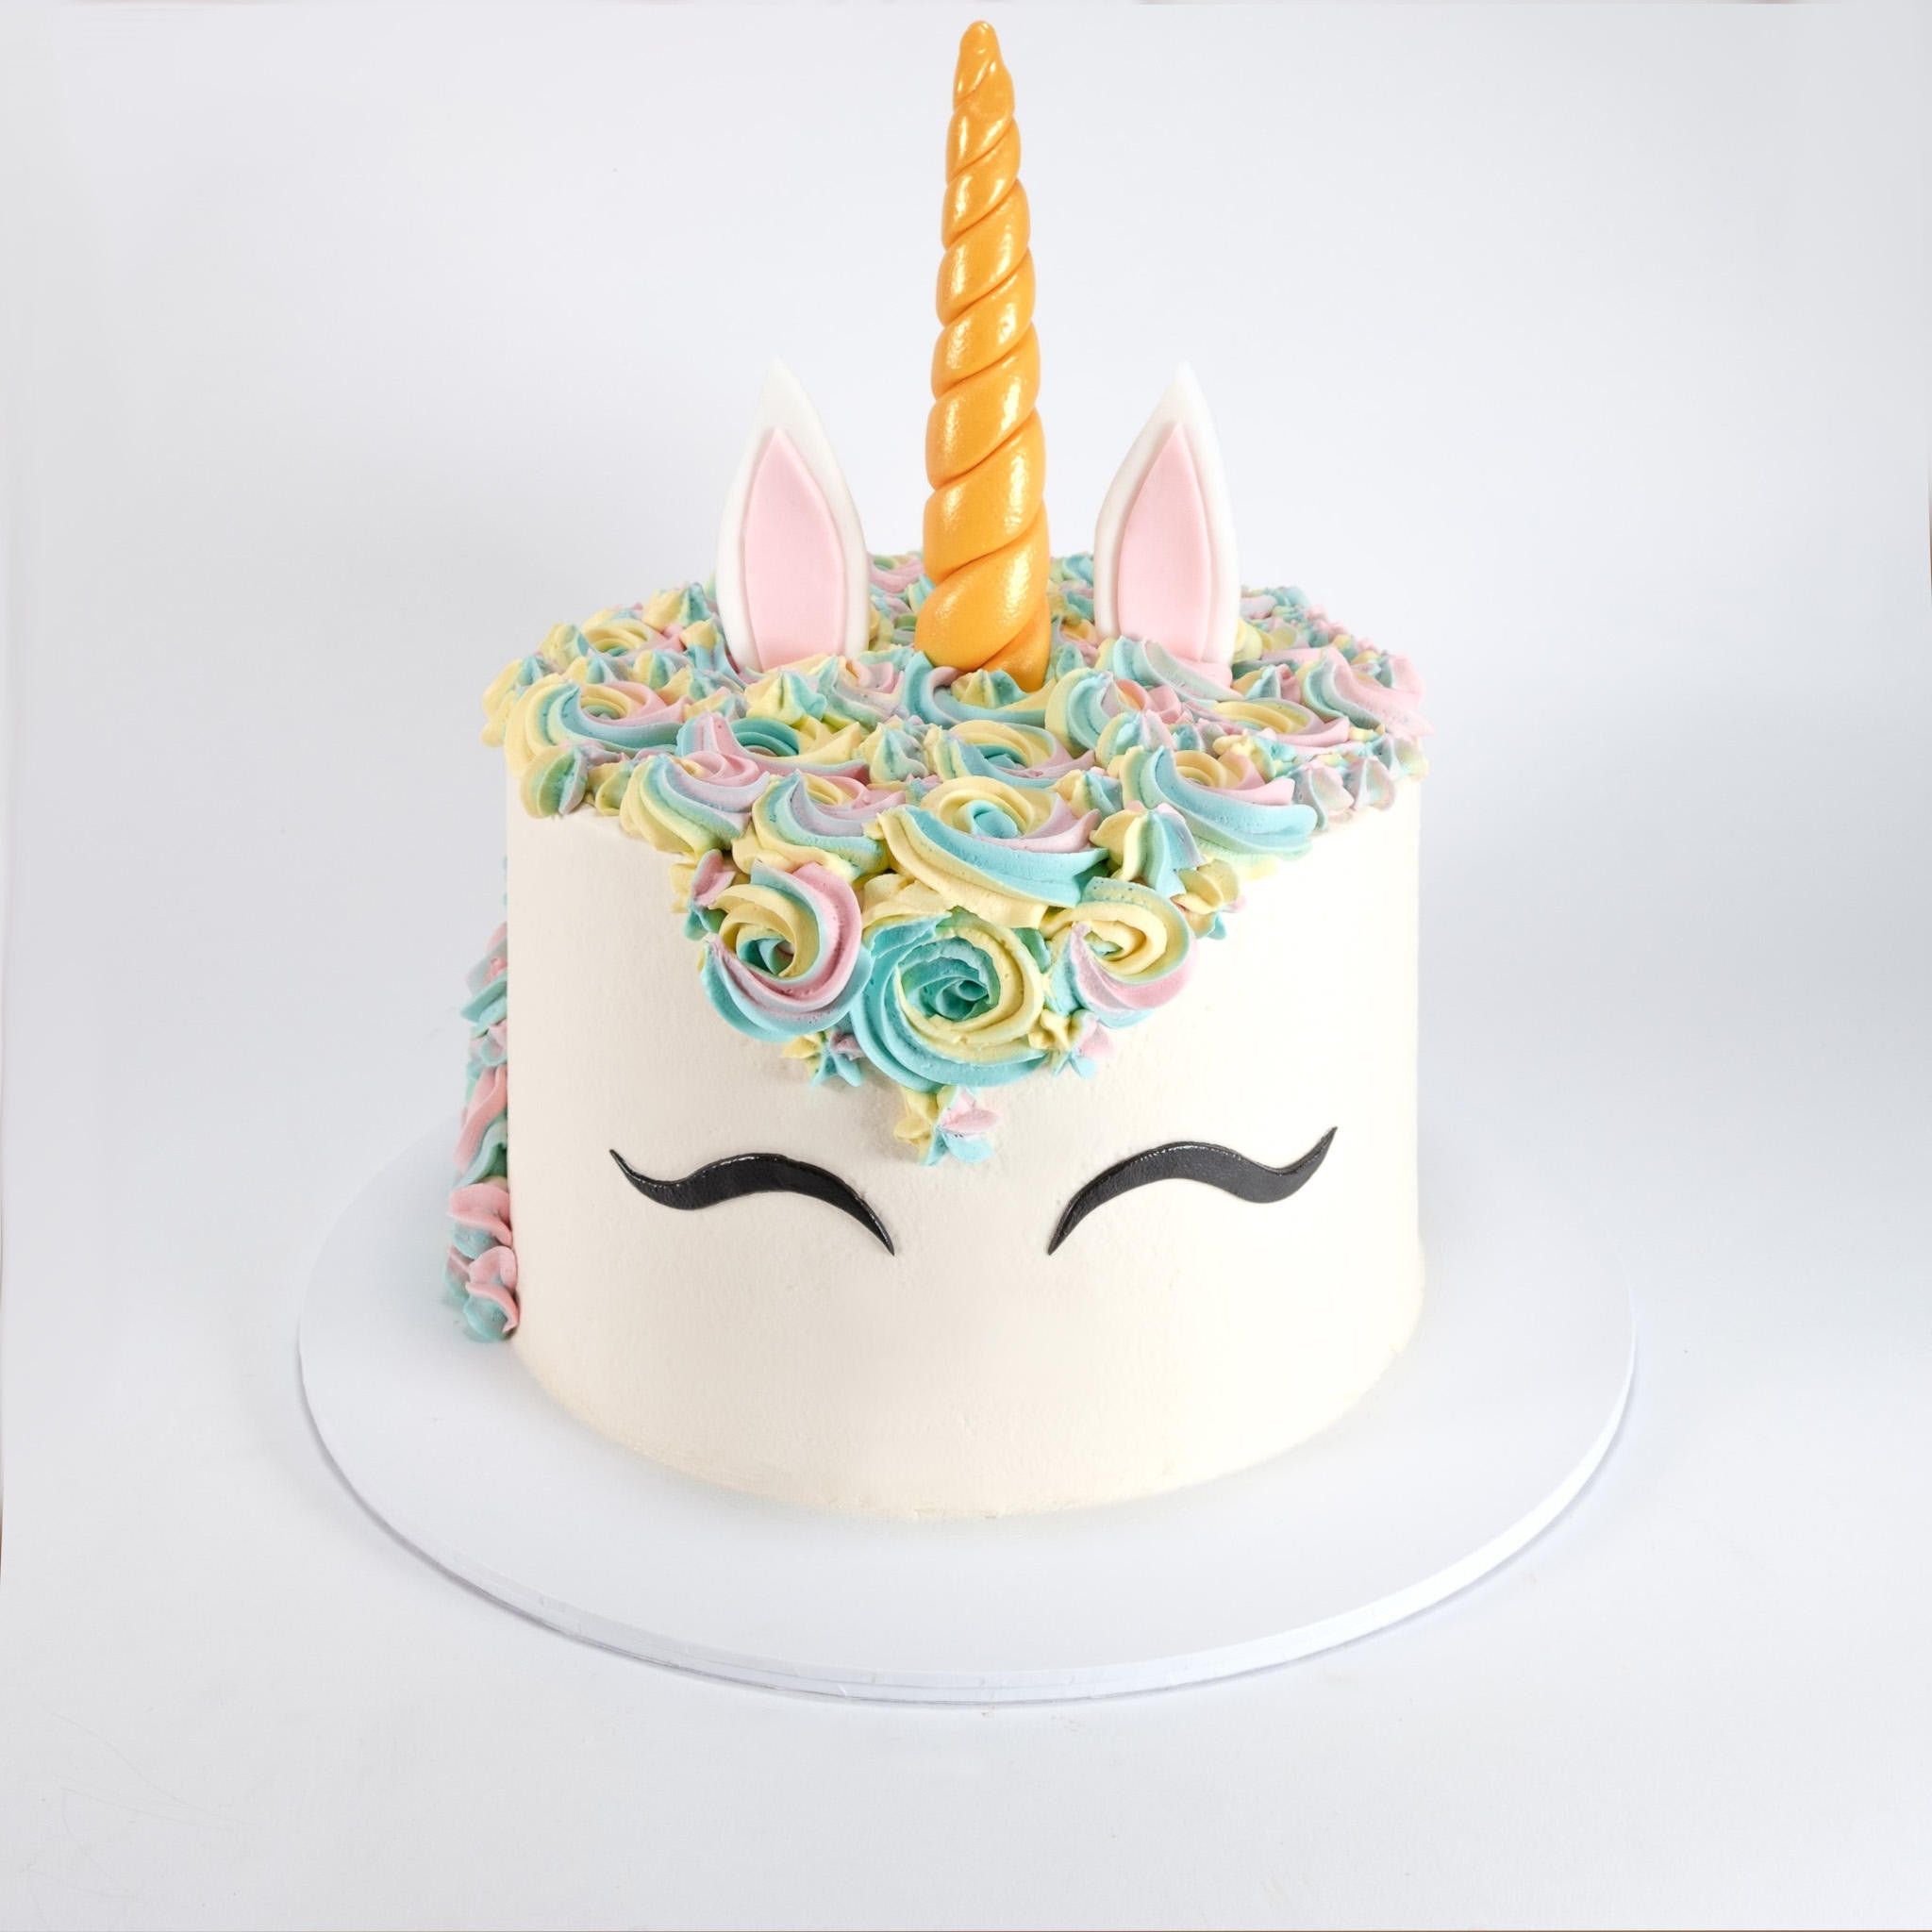 Order Unicorn Cake Online For Your Kids Birthday